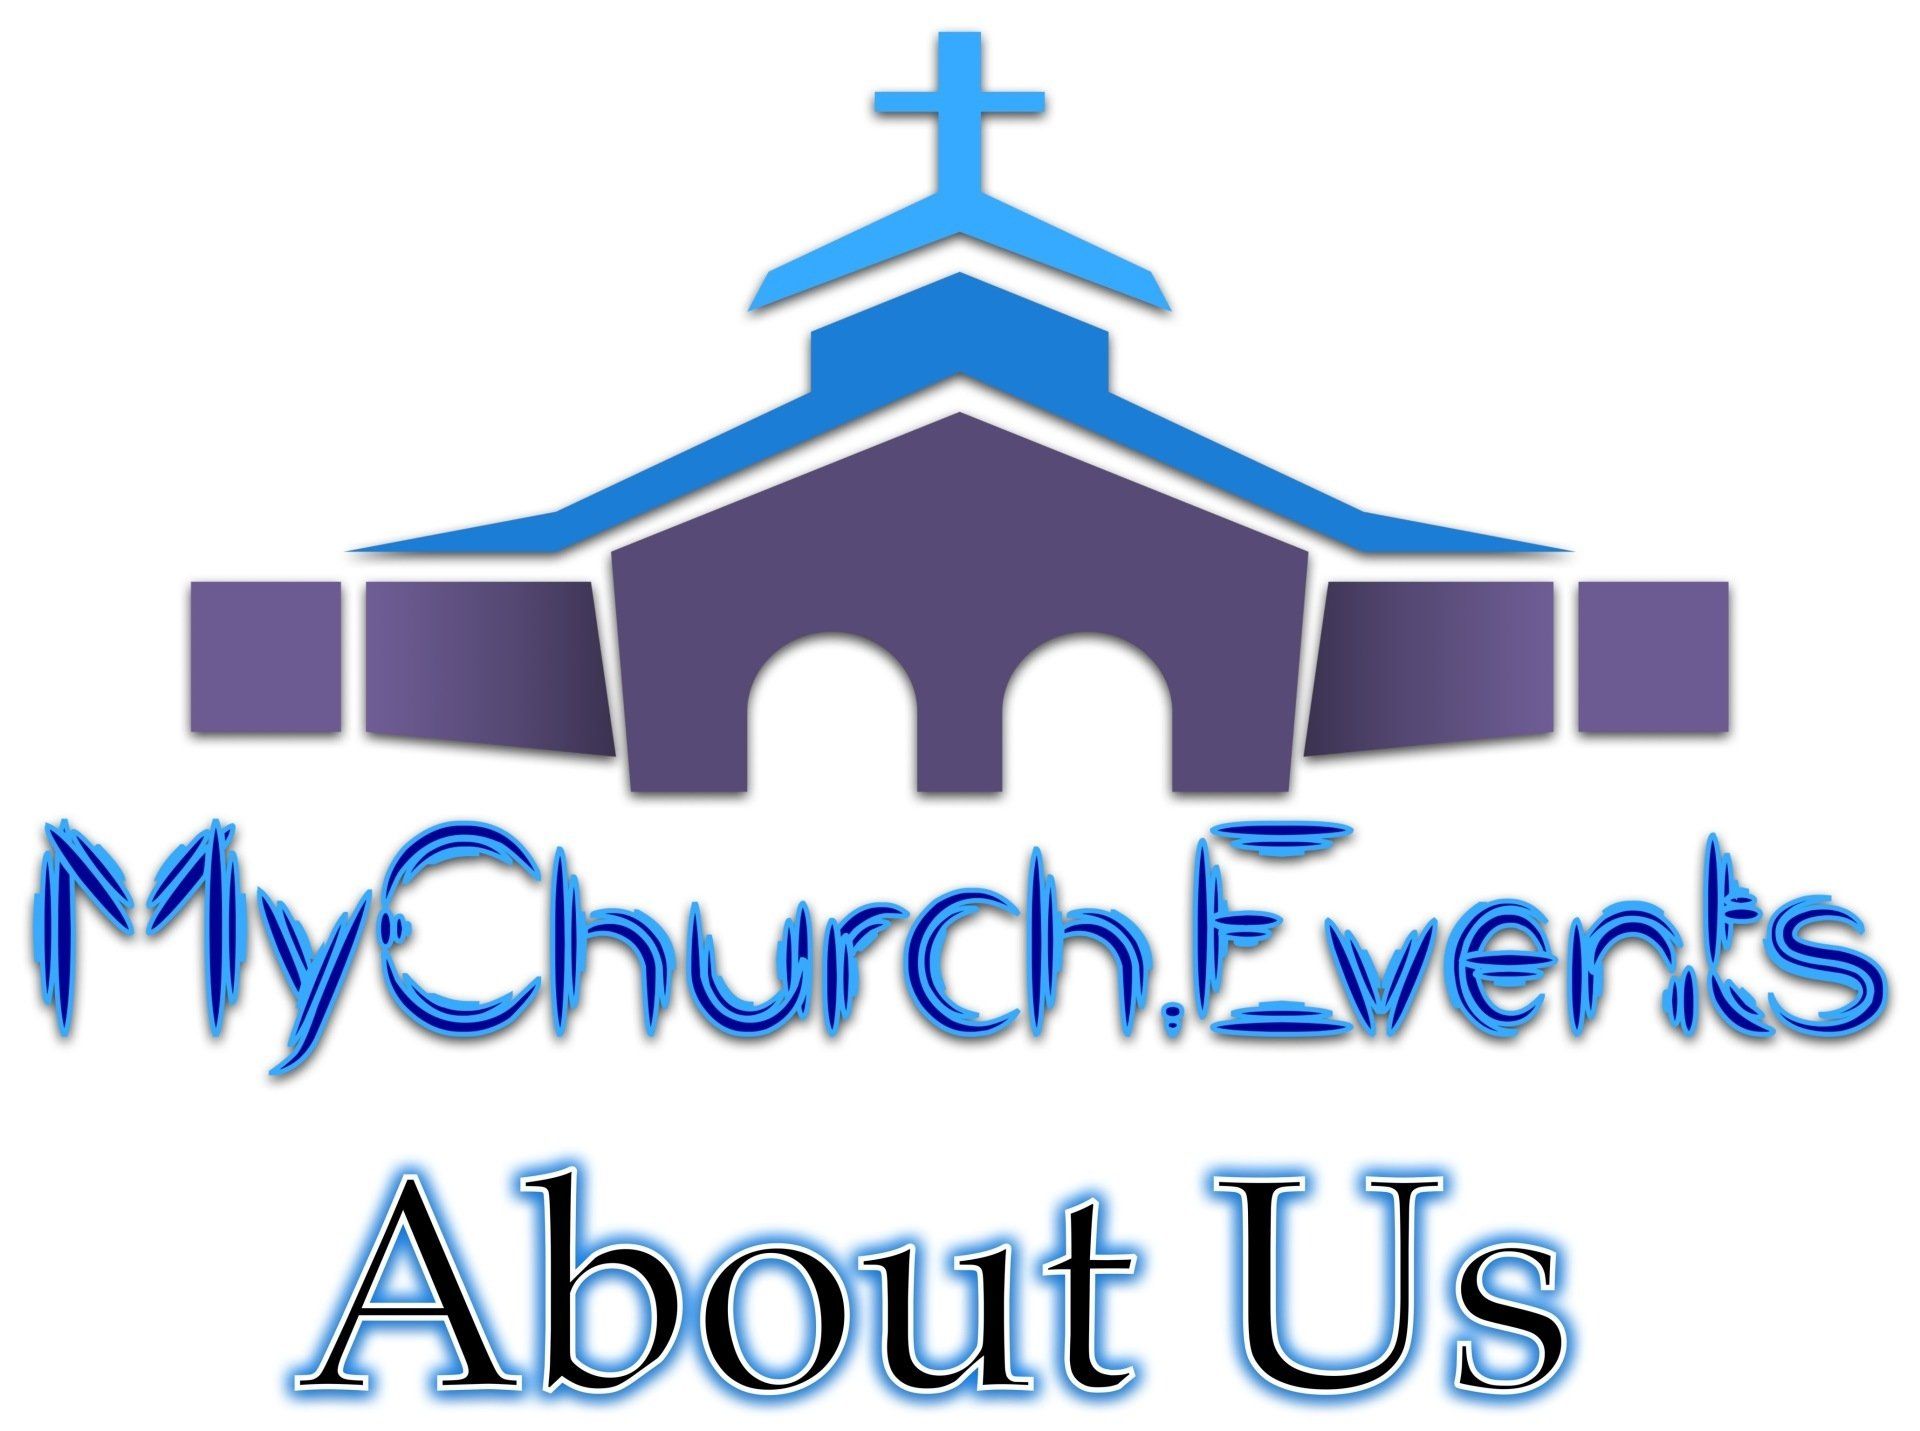 MyChurch.Events About Us